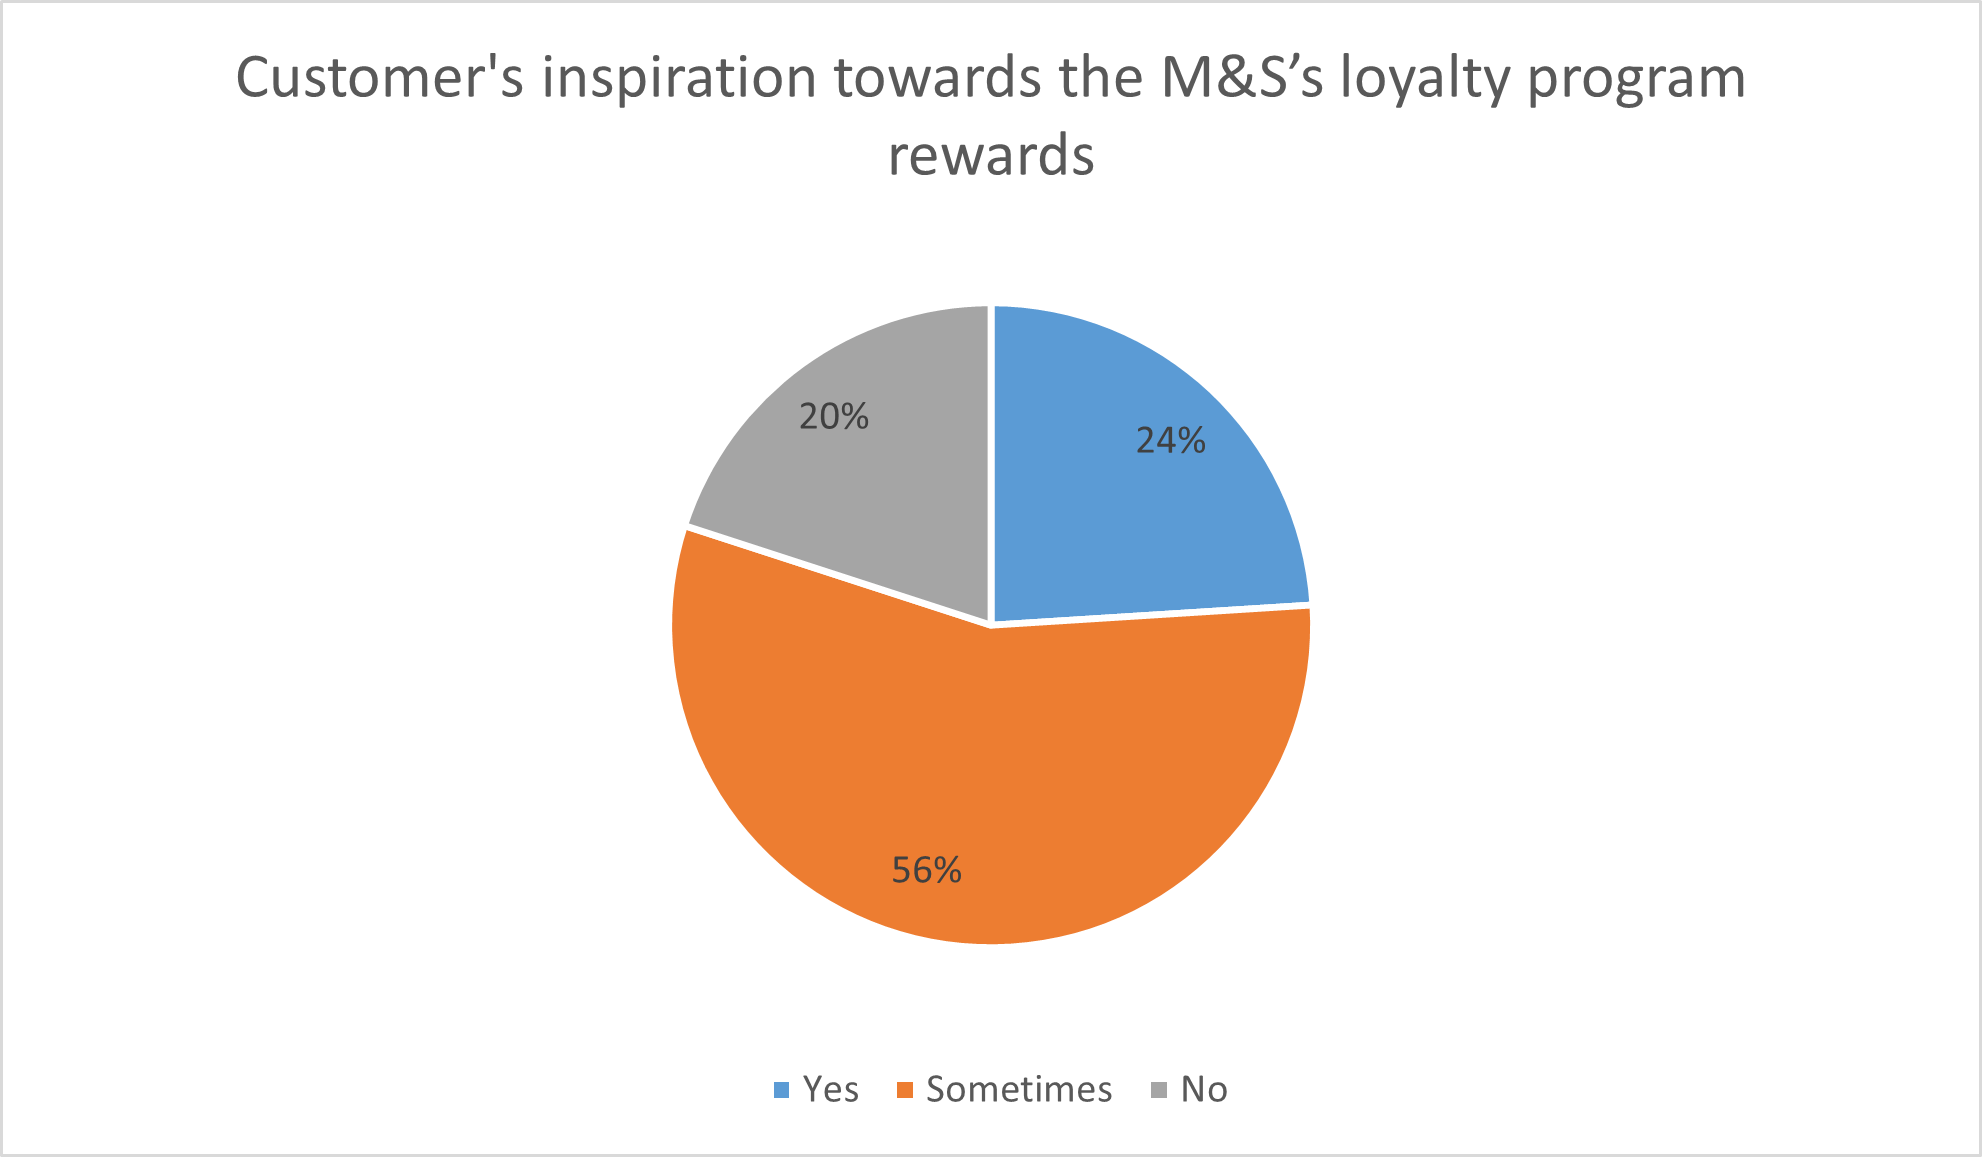 Customer’s inspiration towards the M&S’s loyalty program rewards